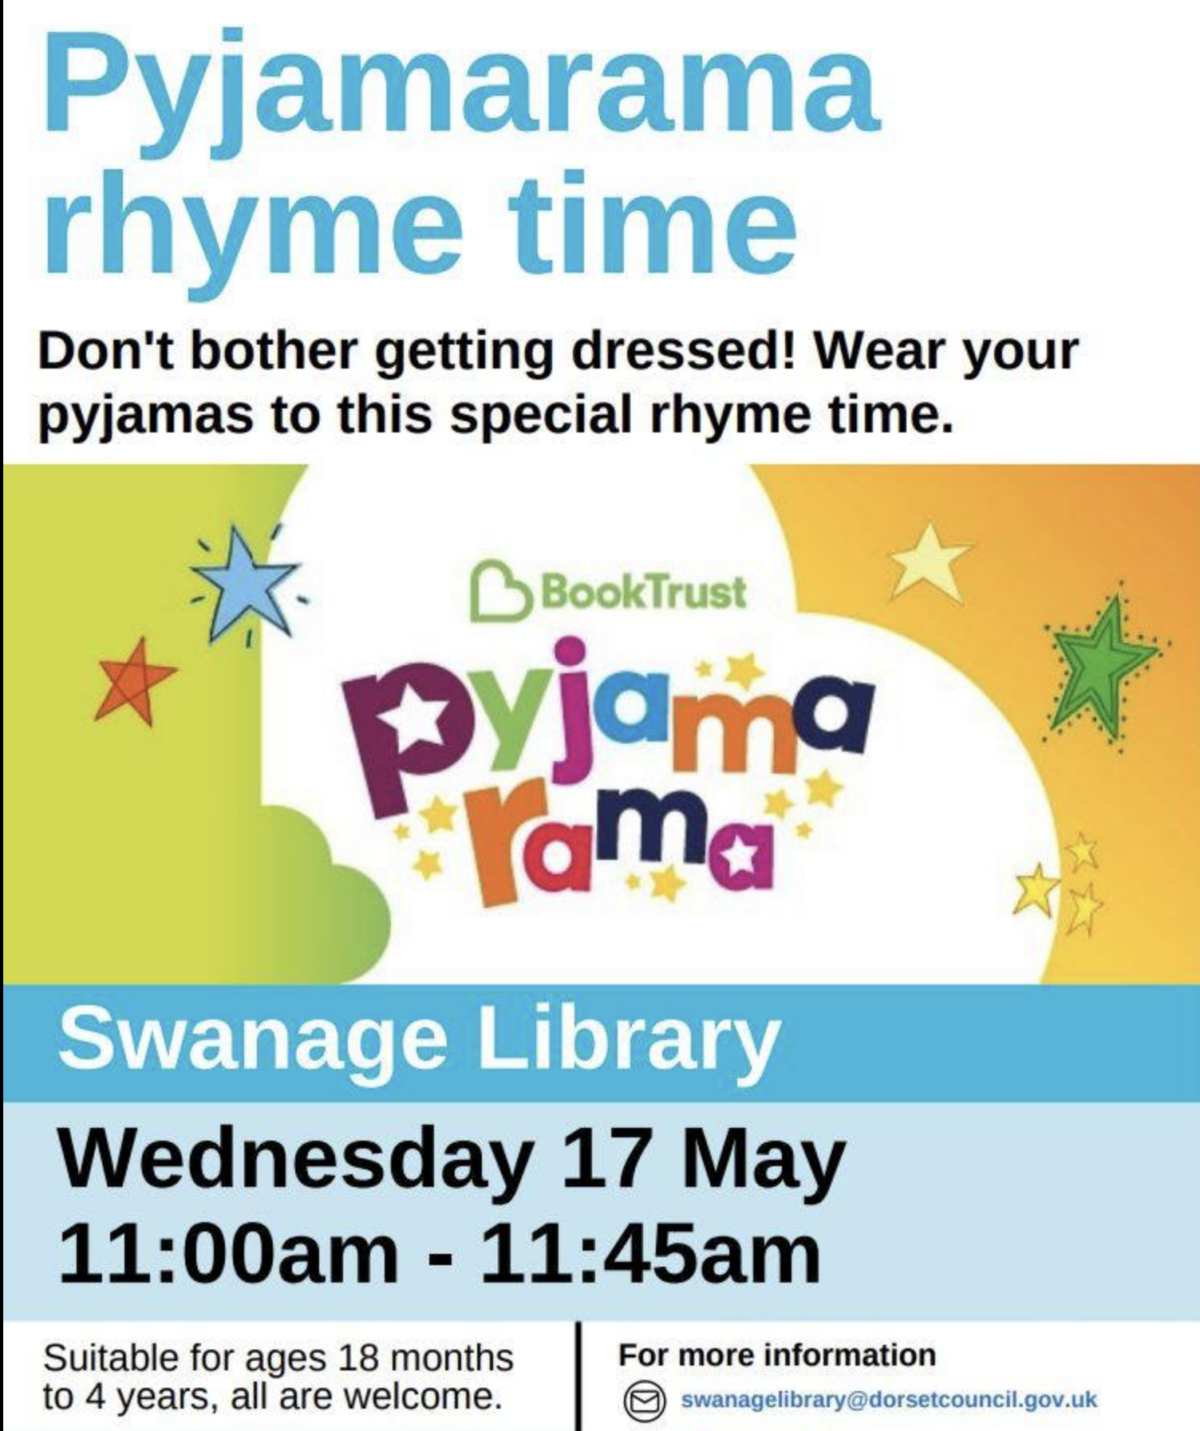 Swanage pyjamarama rhyme time flyer